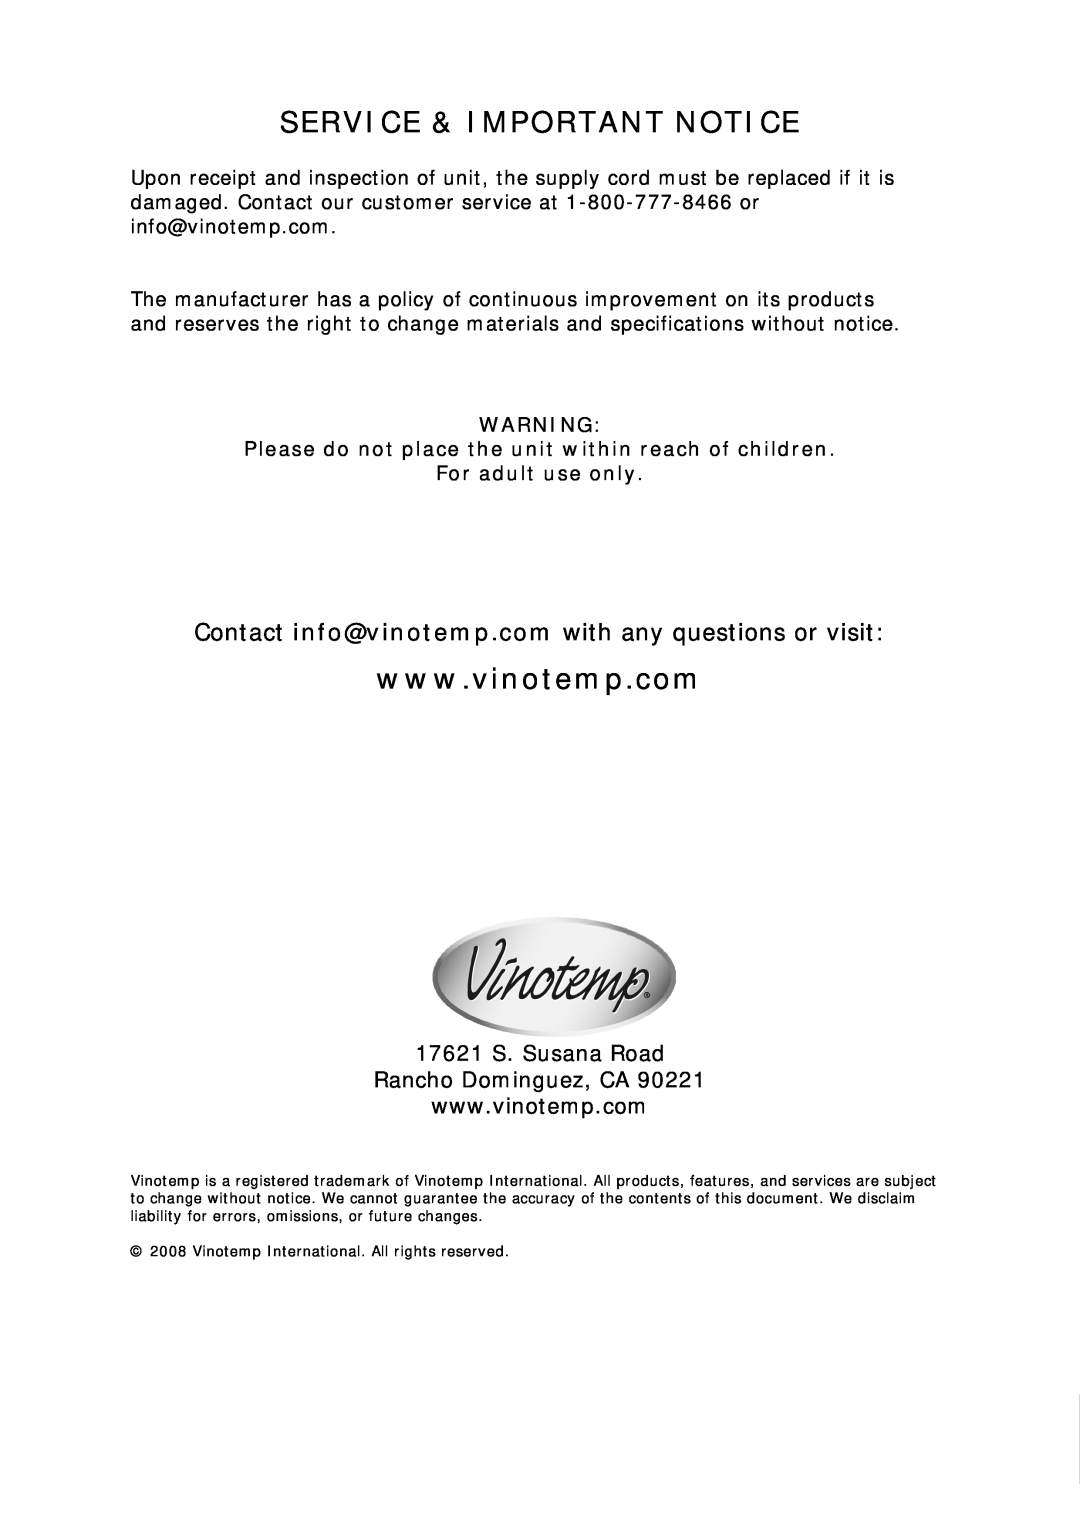 Vinotemp VT-26BC owner manual Service & Important Notice, W W W . V I N O T E M P . C O M, For adult use only 